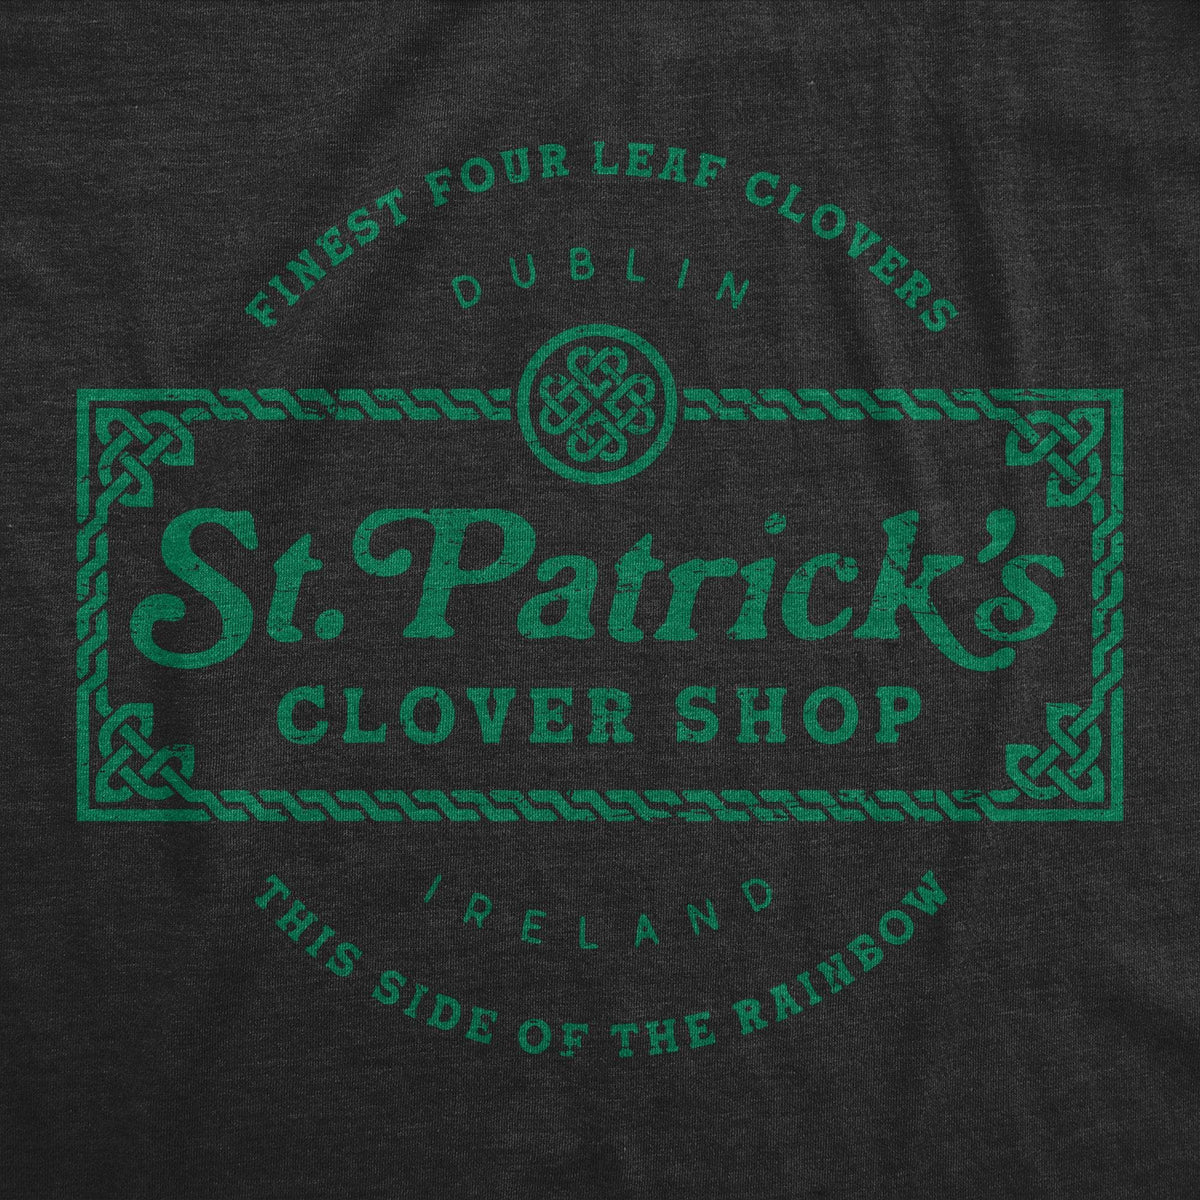 St. Patrick&#39;s Clover Shop Men&#39;s Tshirt  -  Crazy Dog T-Shirts